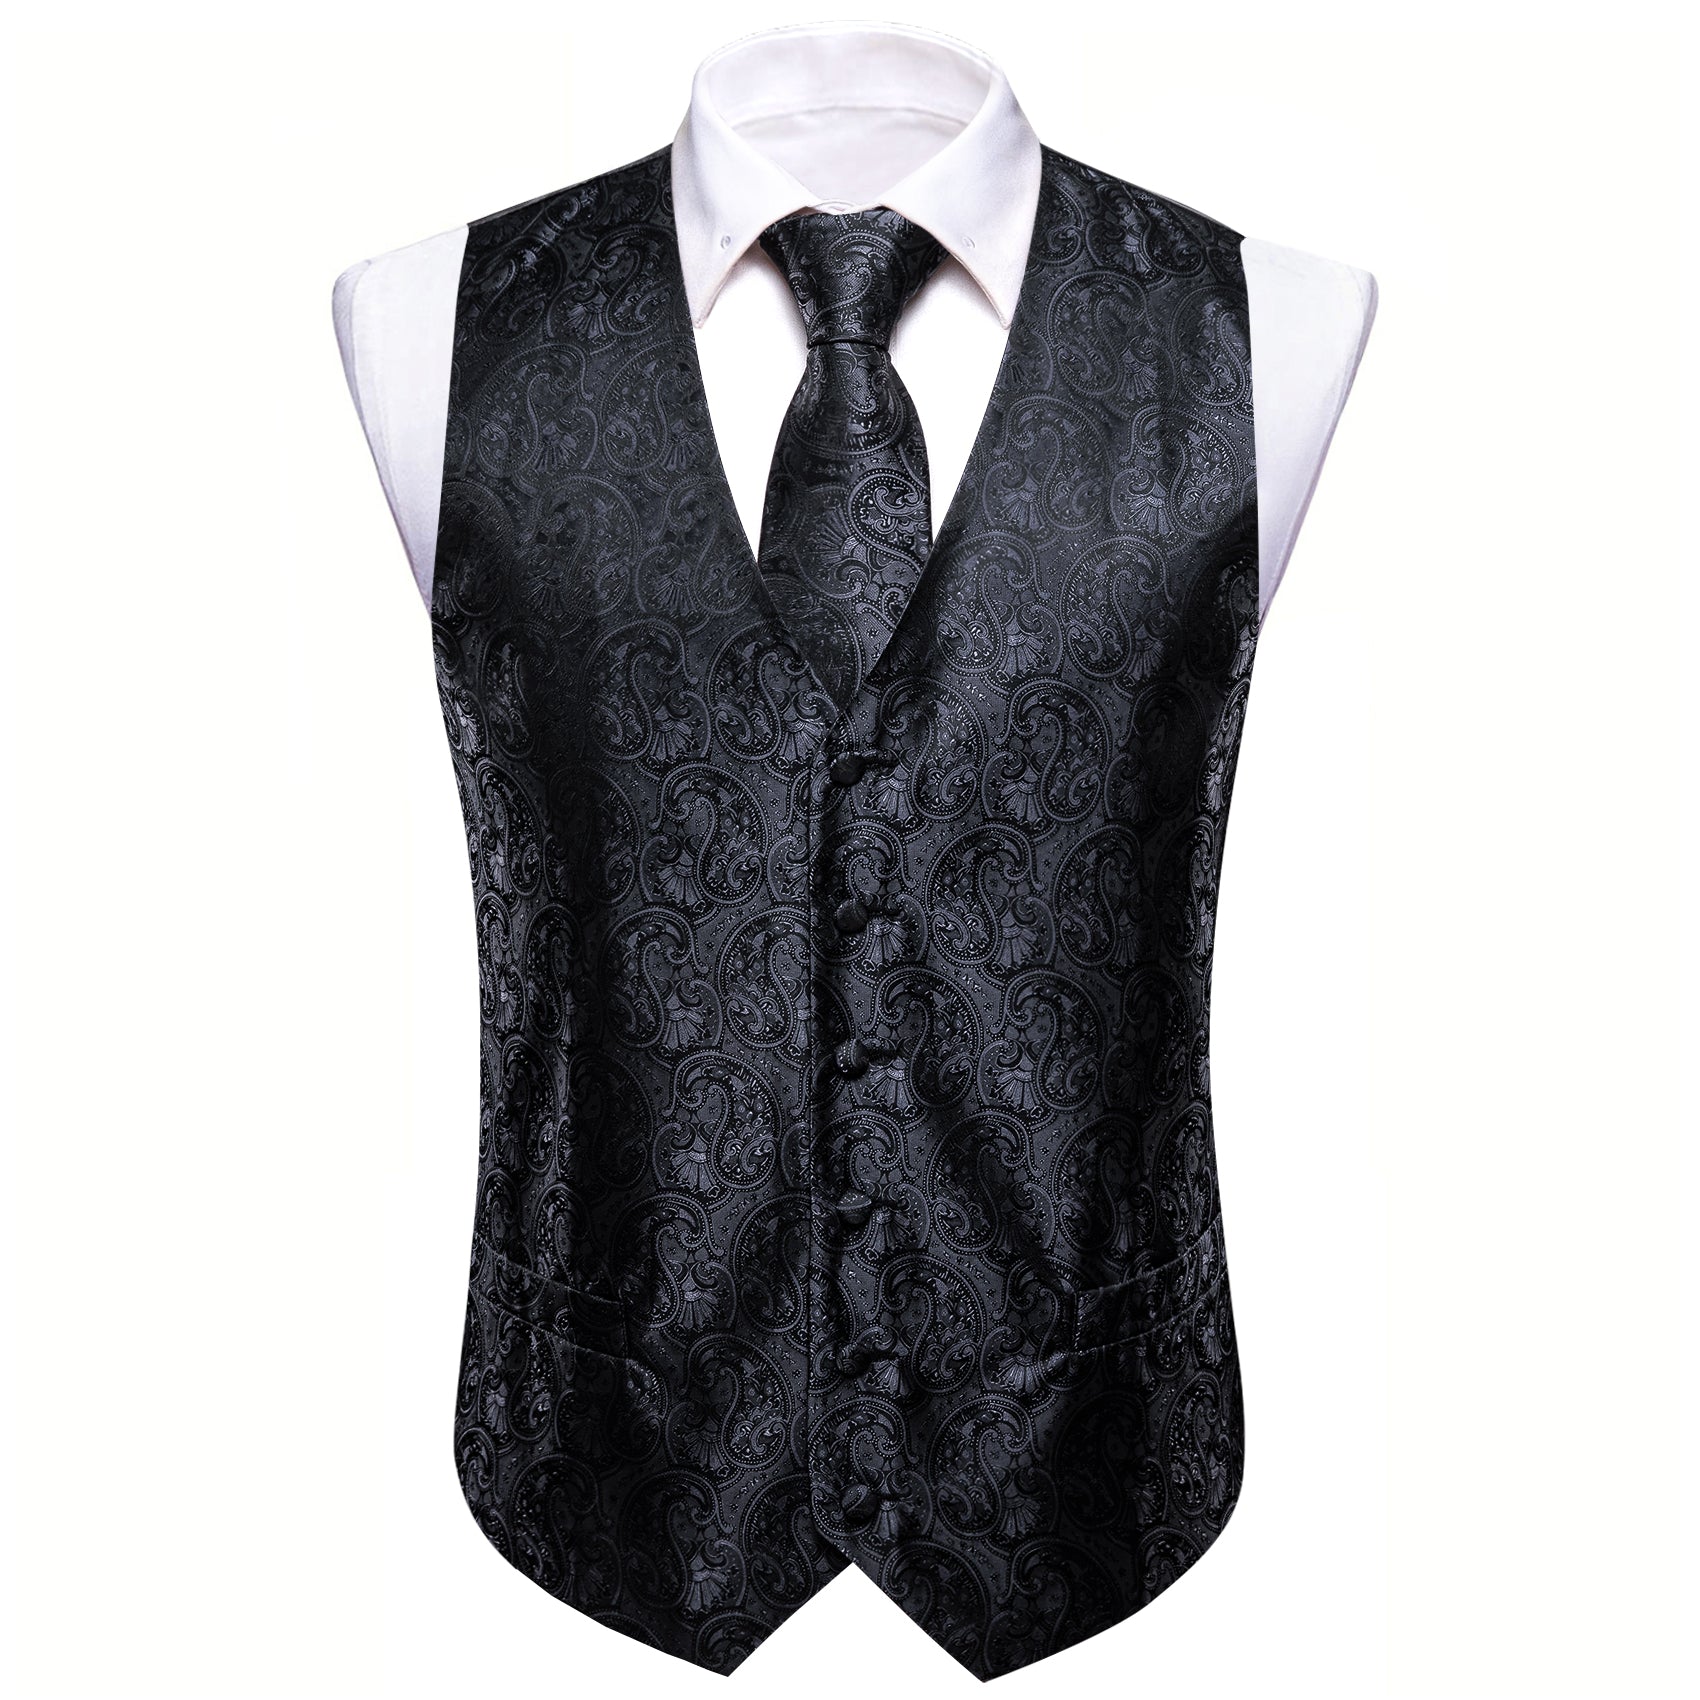 Men's Black Paisley Silk Vest Necktie Pocket square Cufflinks